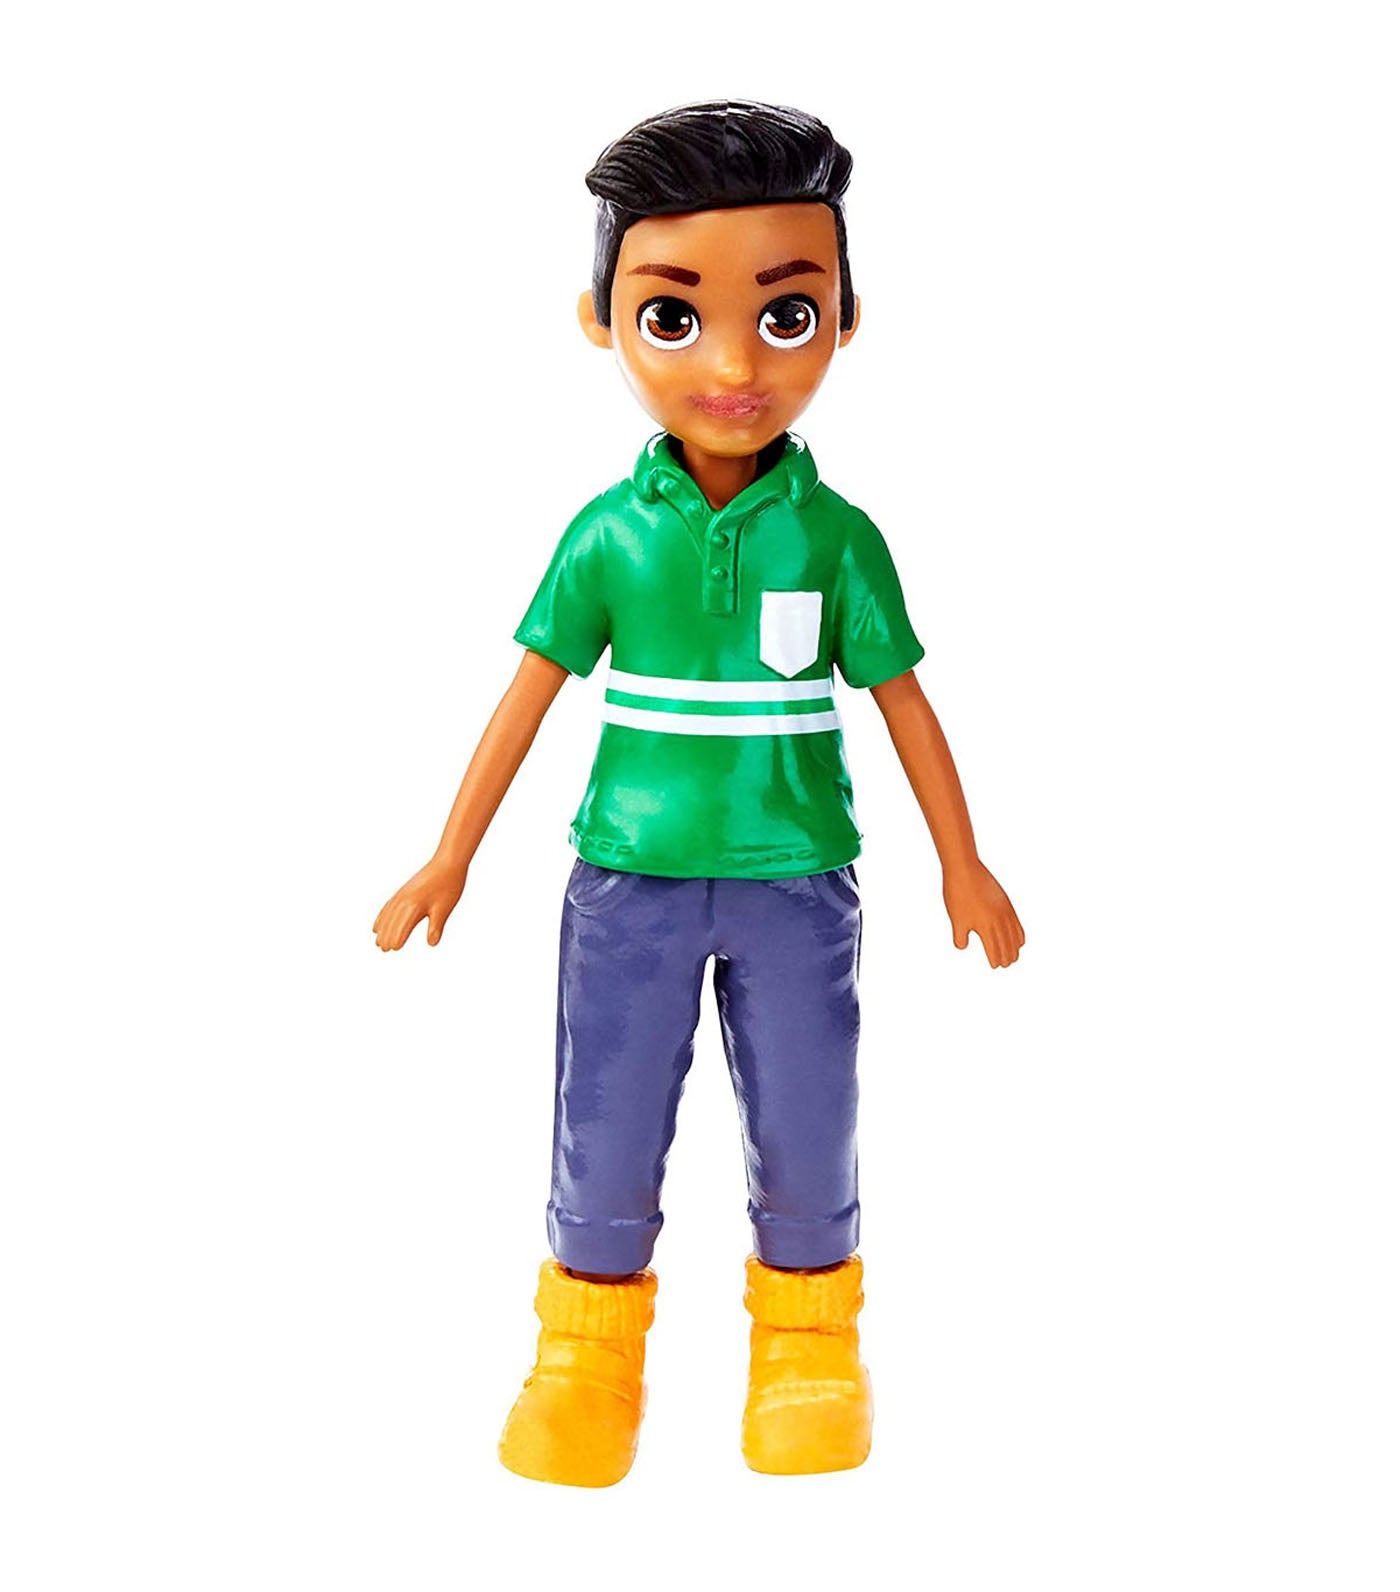 Impulse Doll - Nicholas with Green Shirt